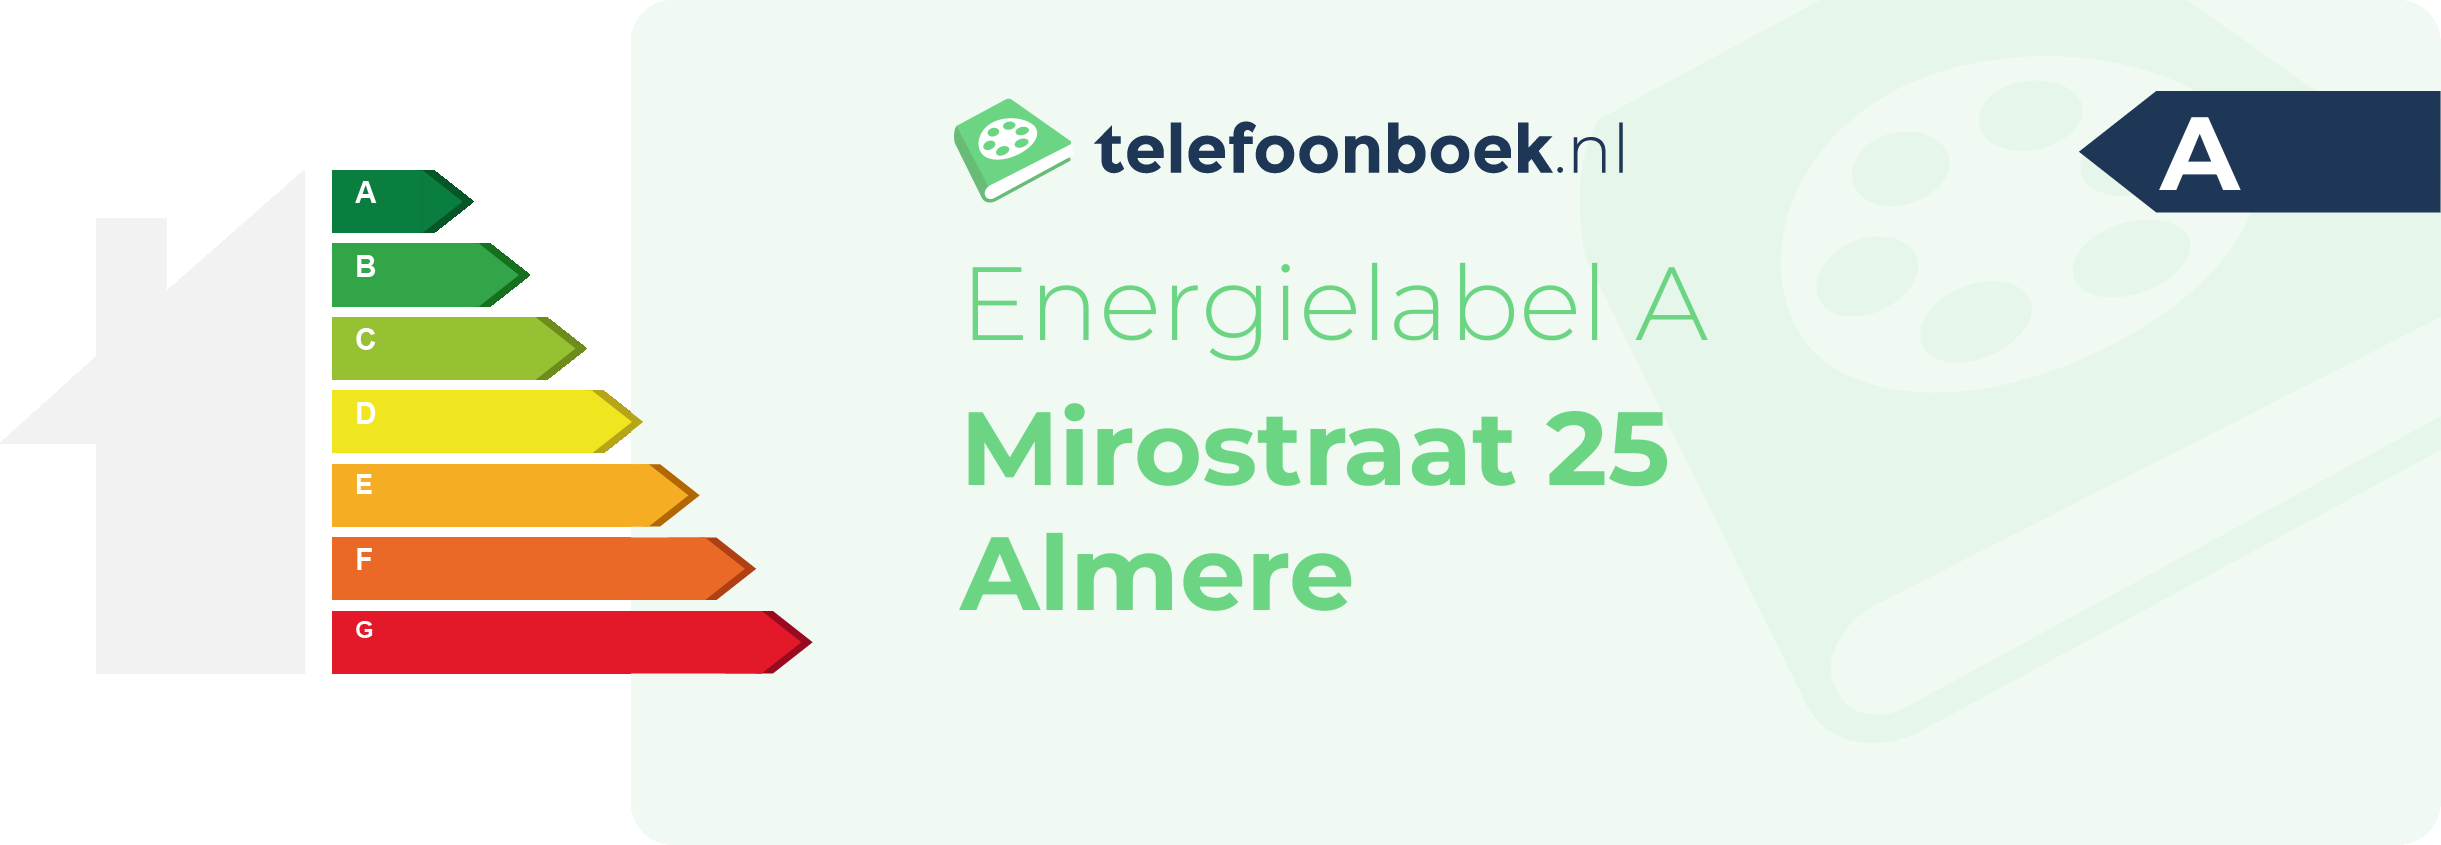 Energielabel Mirostraat 25 Almere